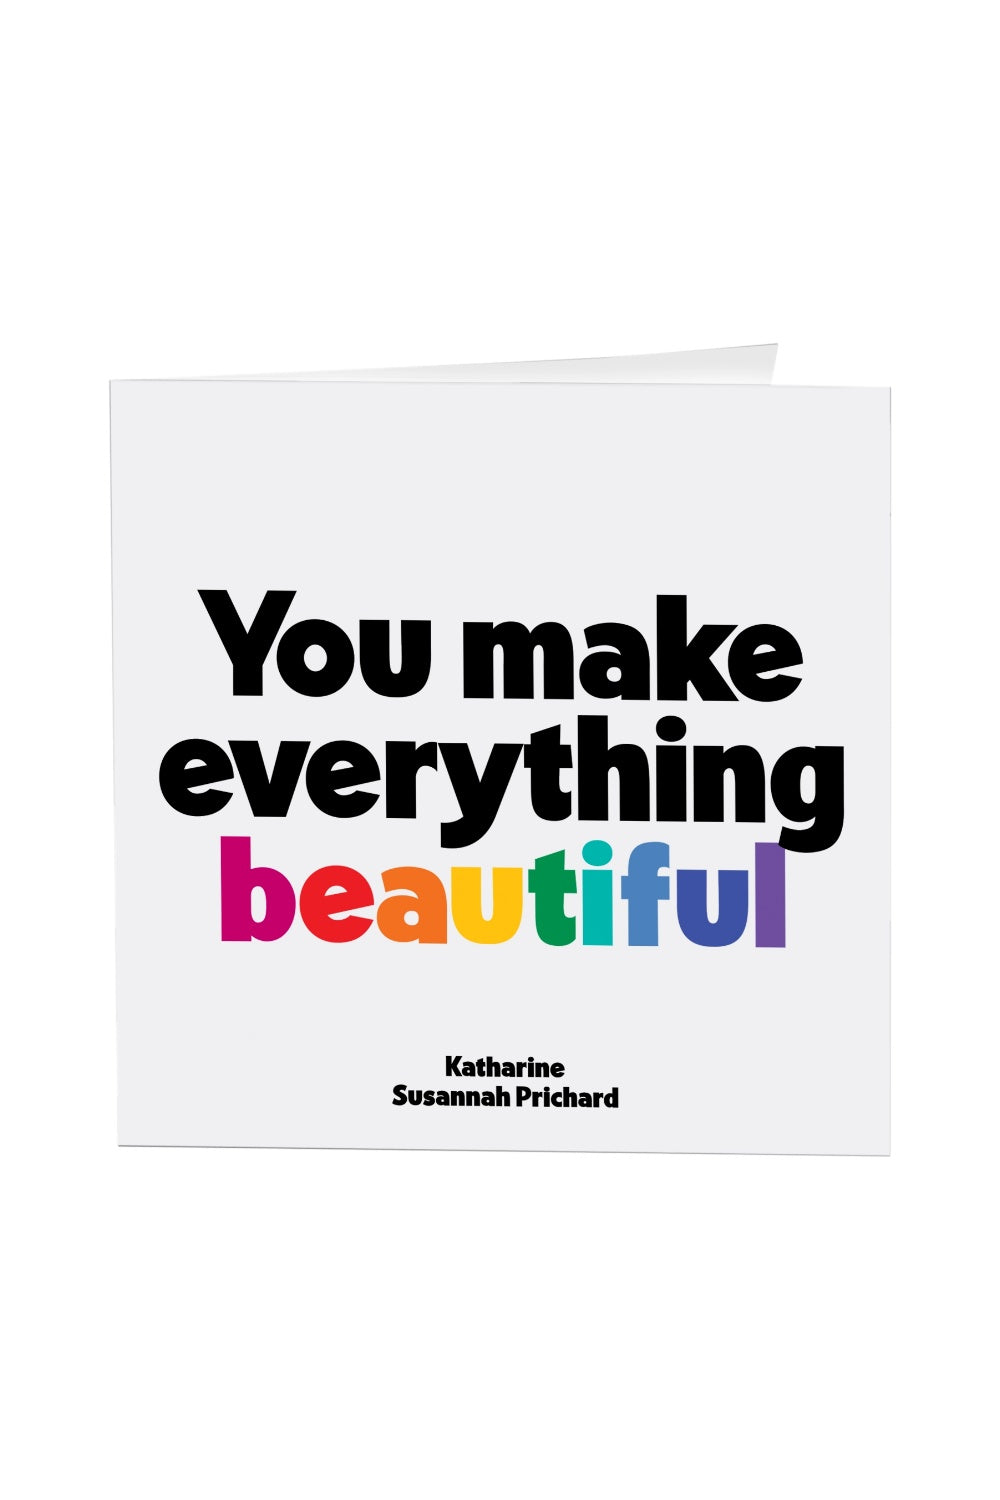 YOU MAKE EVERYTHING BEAUTIFUL GREETING CARD